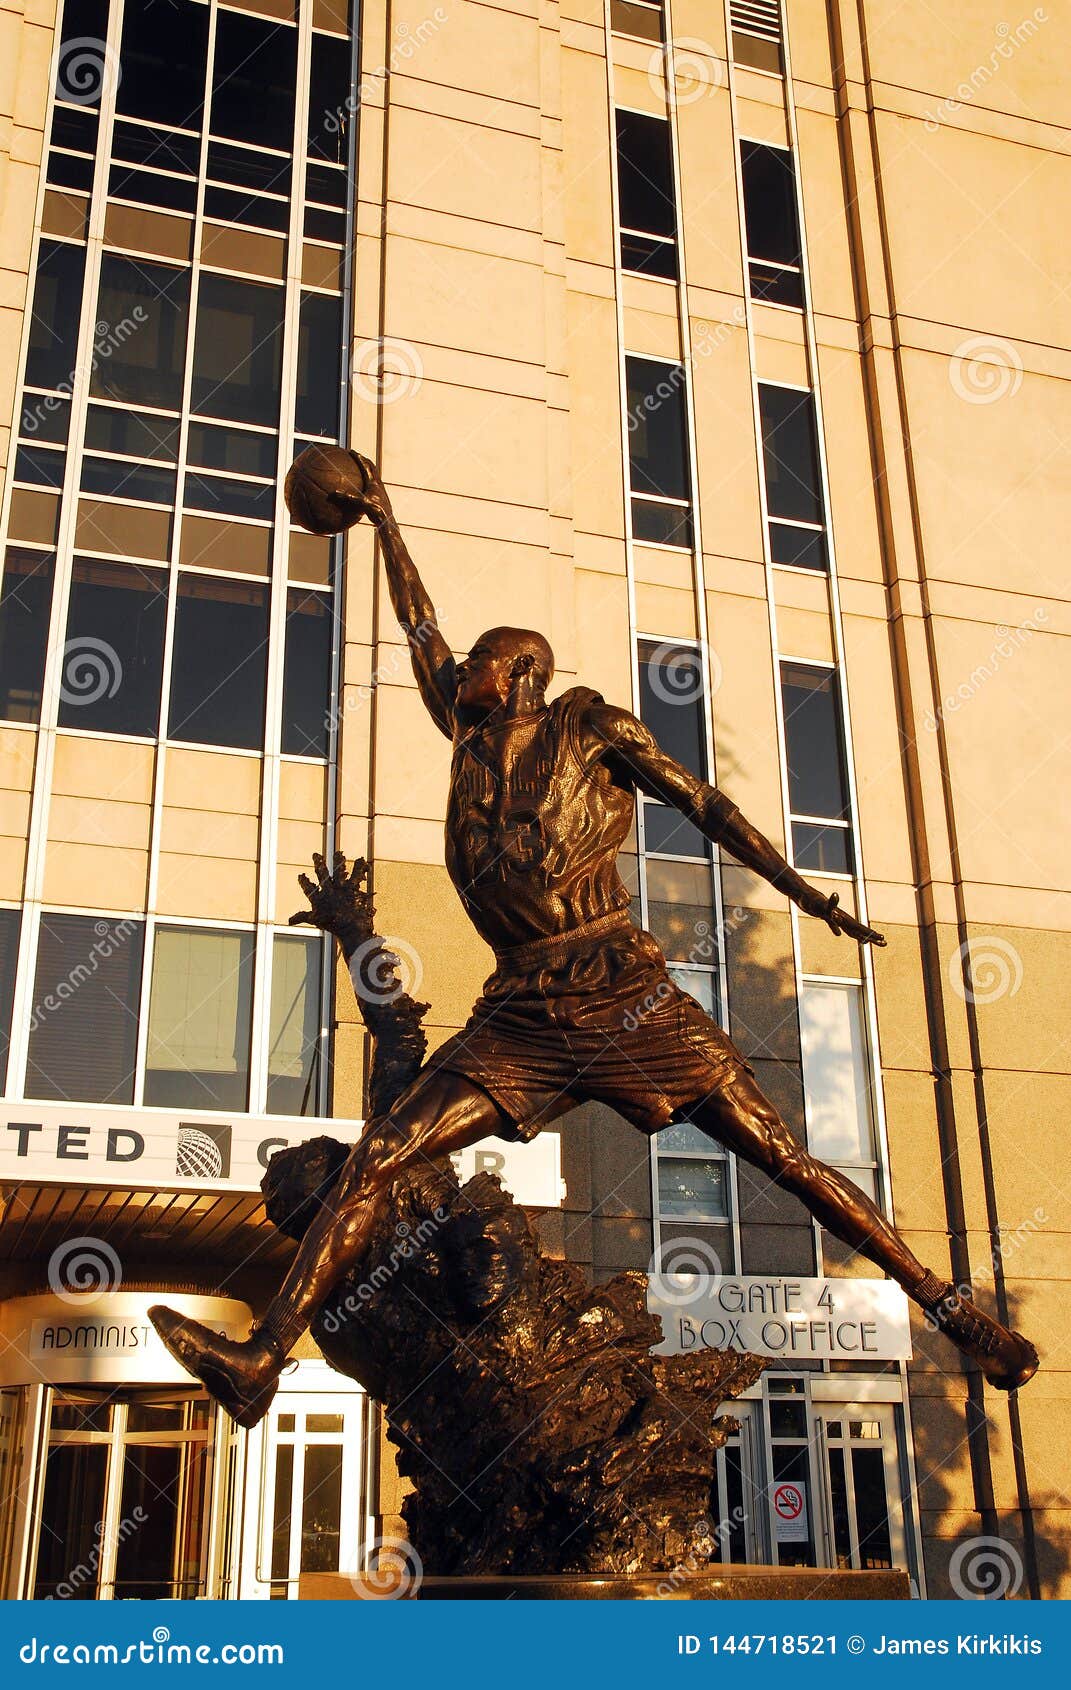 Specialize Pronoun Conjugate Michael Jordan Statue Photos - Free & Royalty-Free Stock Photos from  Dreamstime